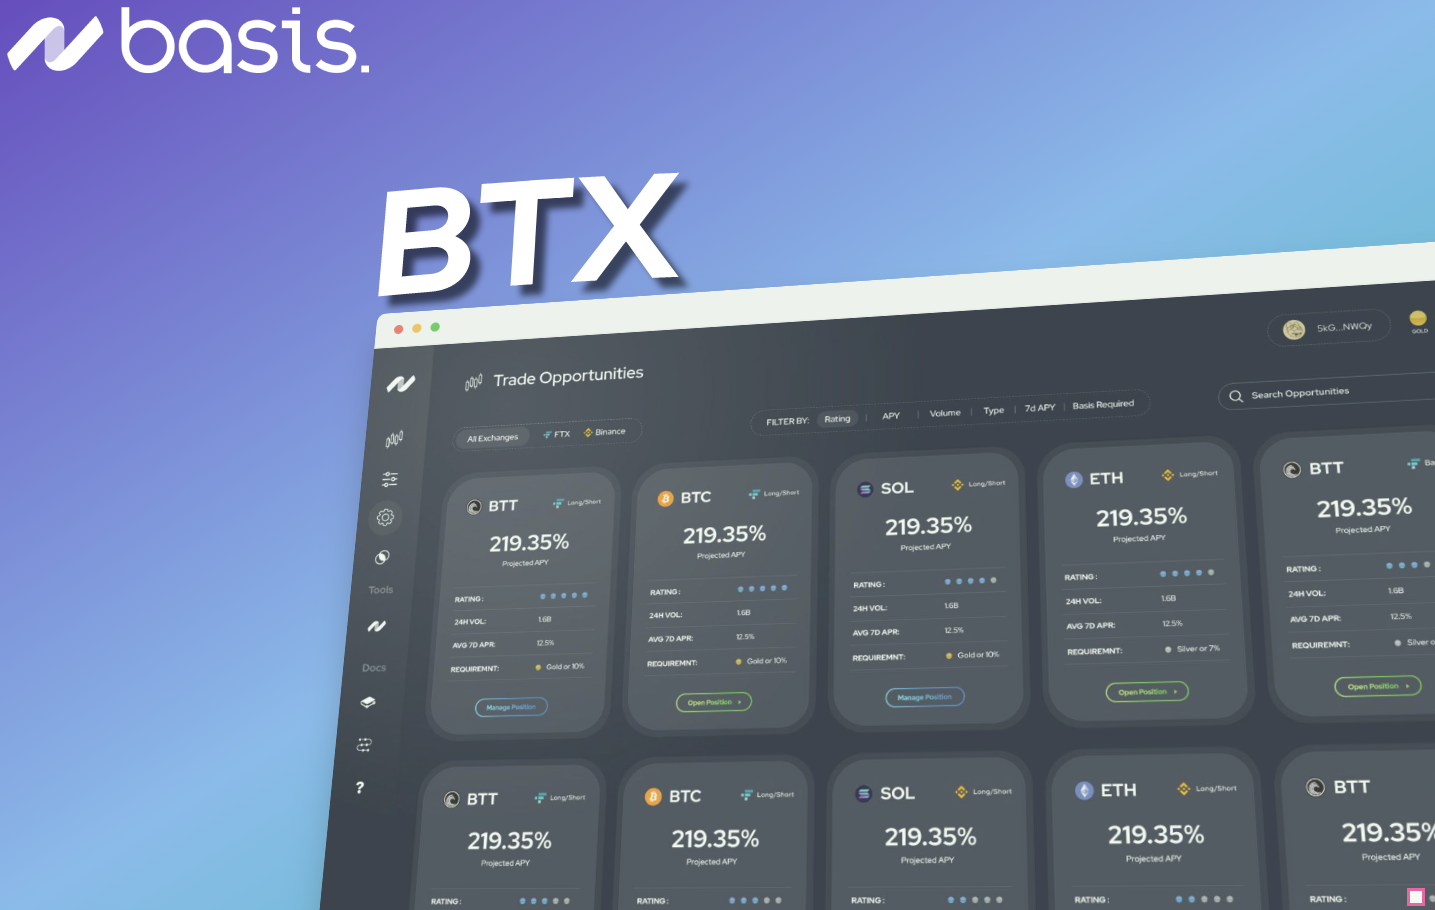 Introducing the BTX